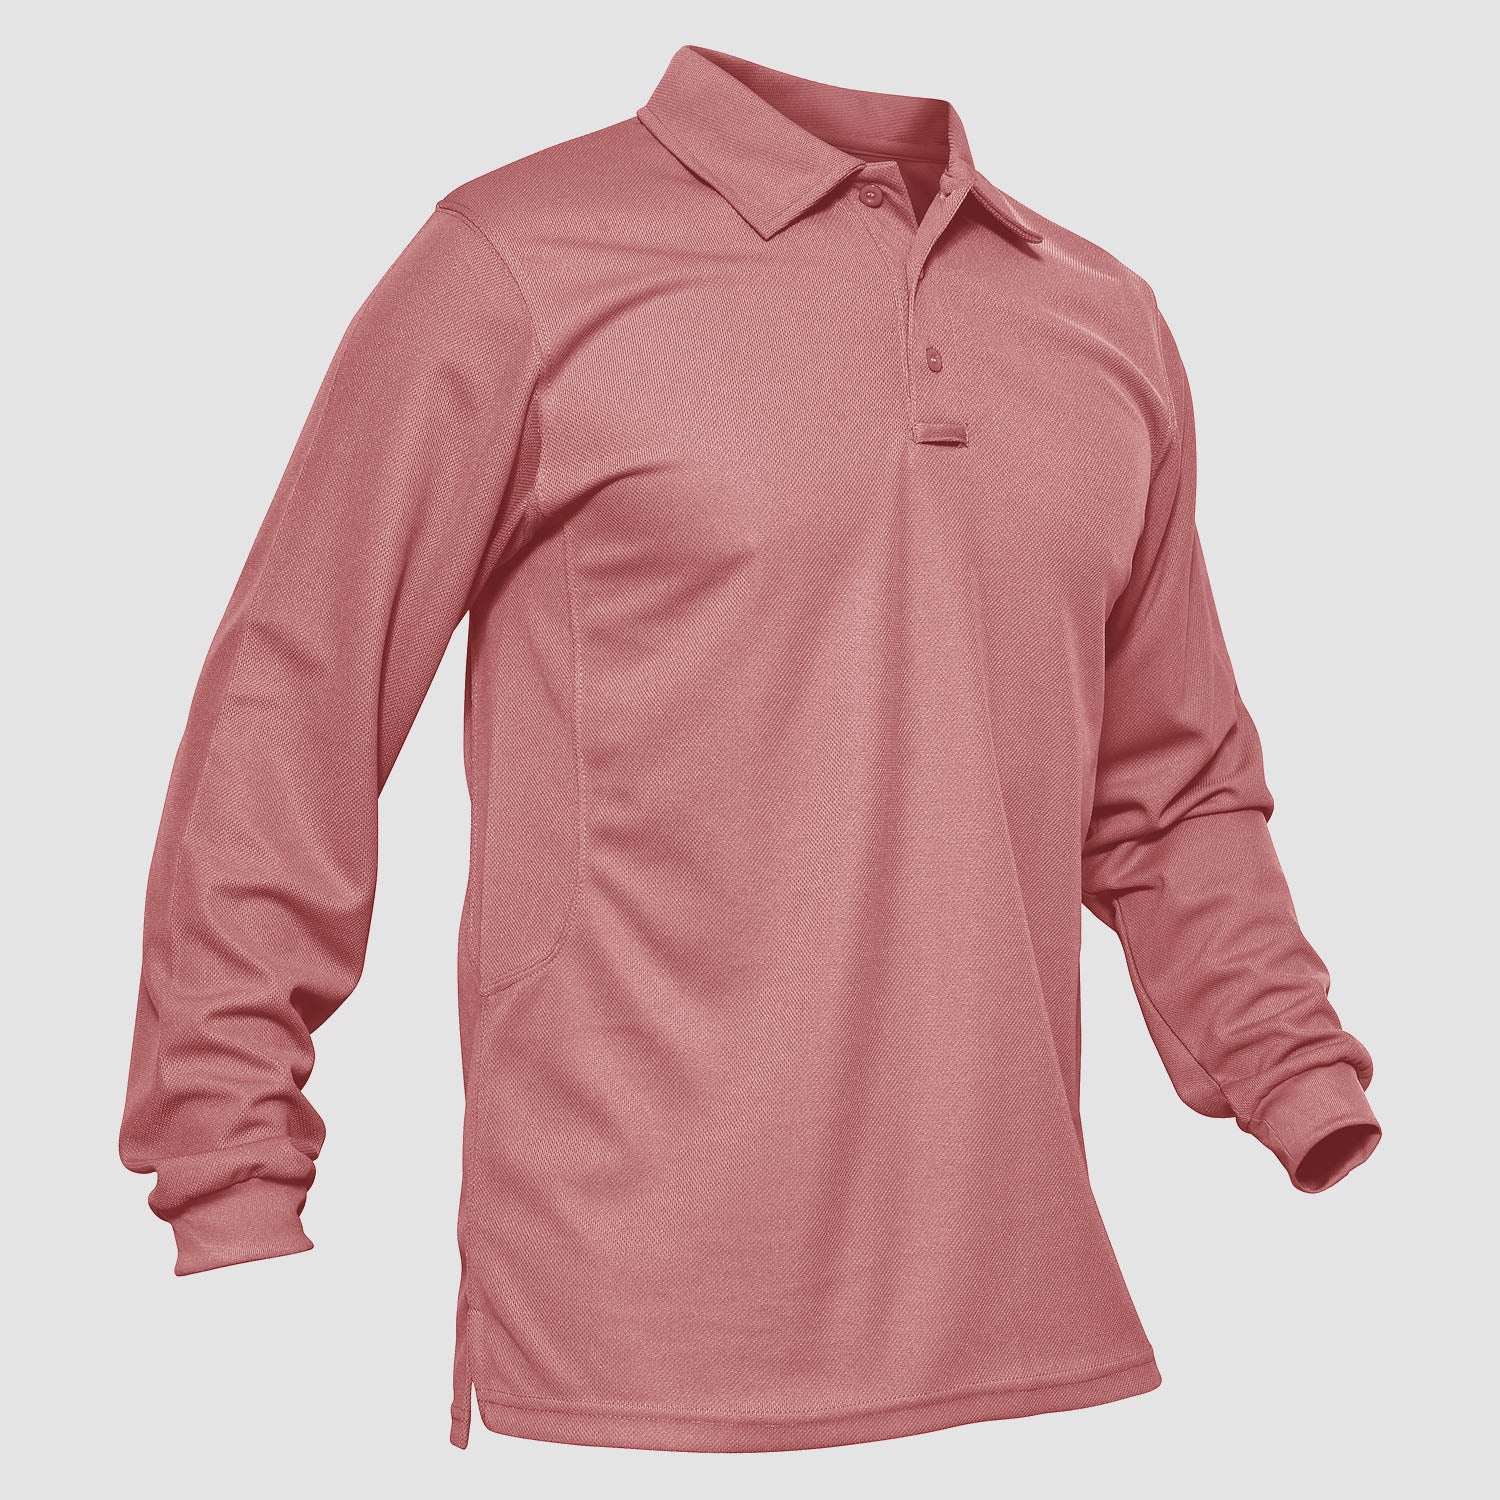 Men's Pink T-Shirts & Polos, Short & Long Sleeve